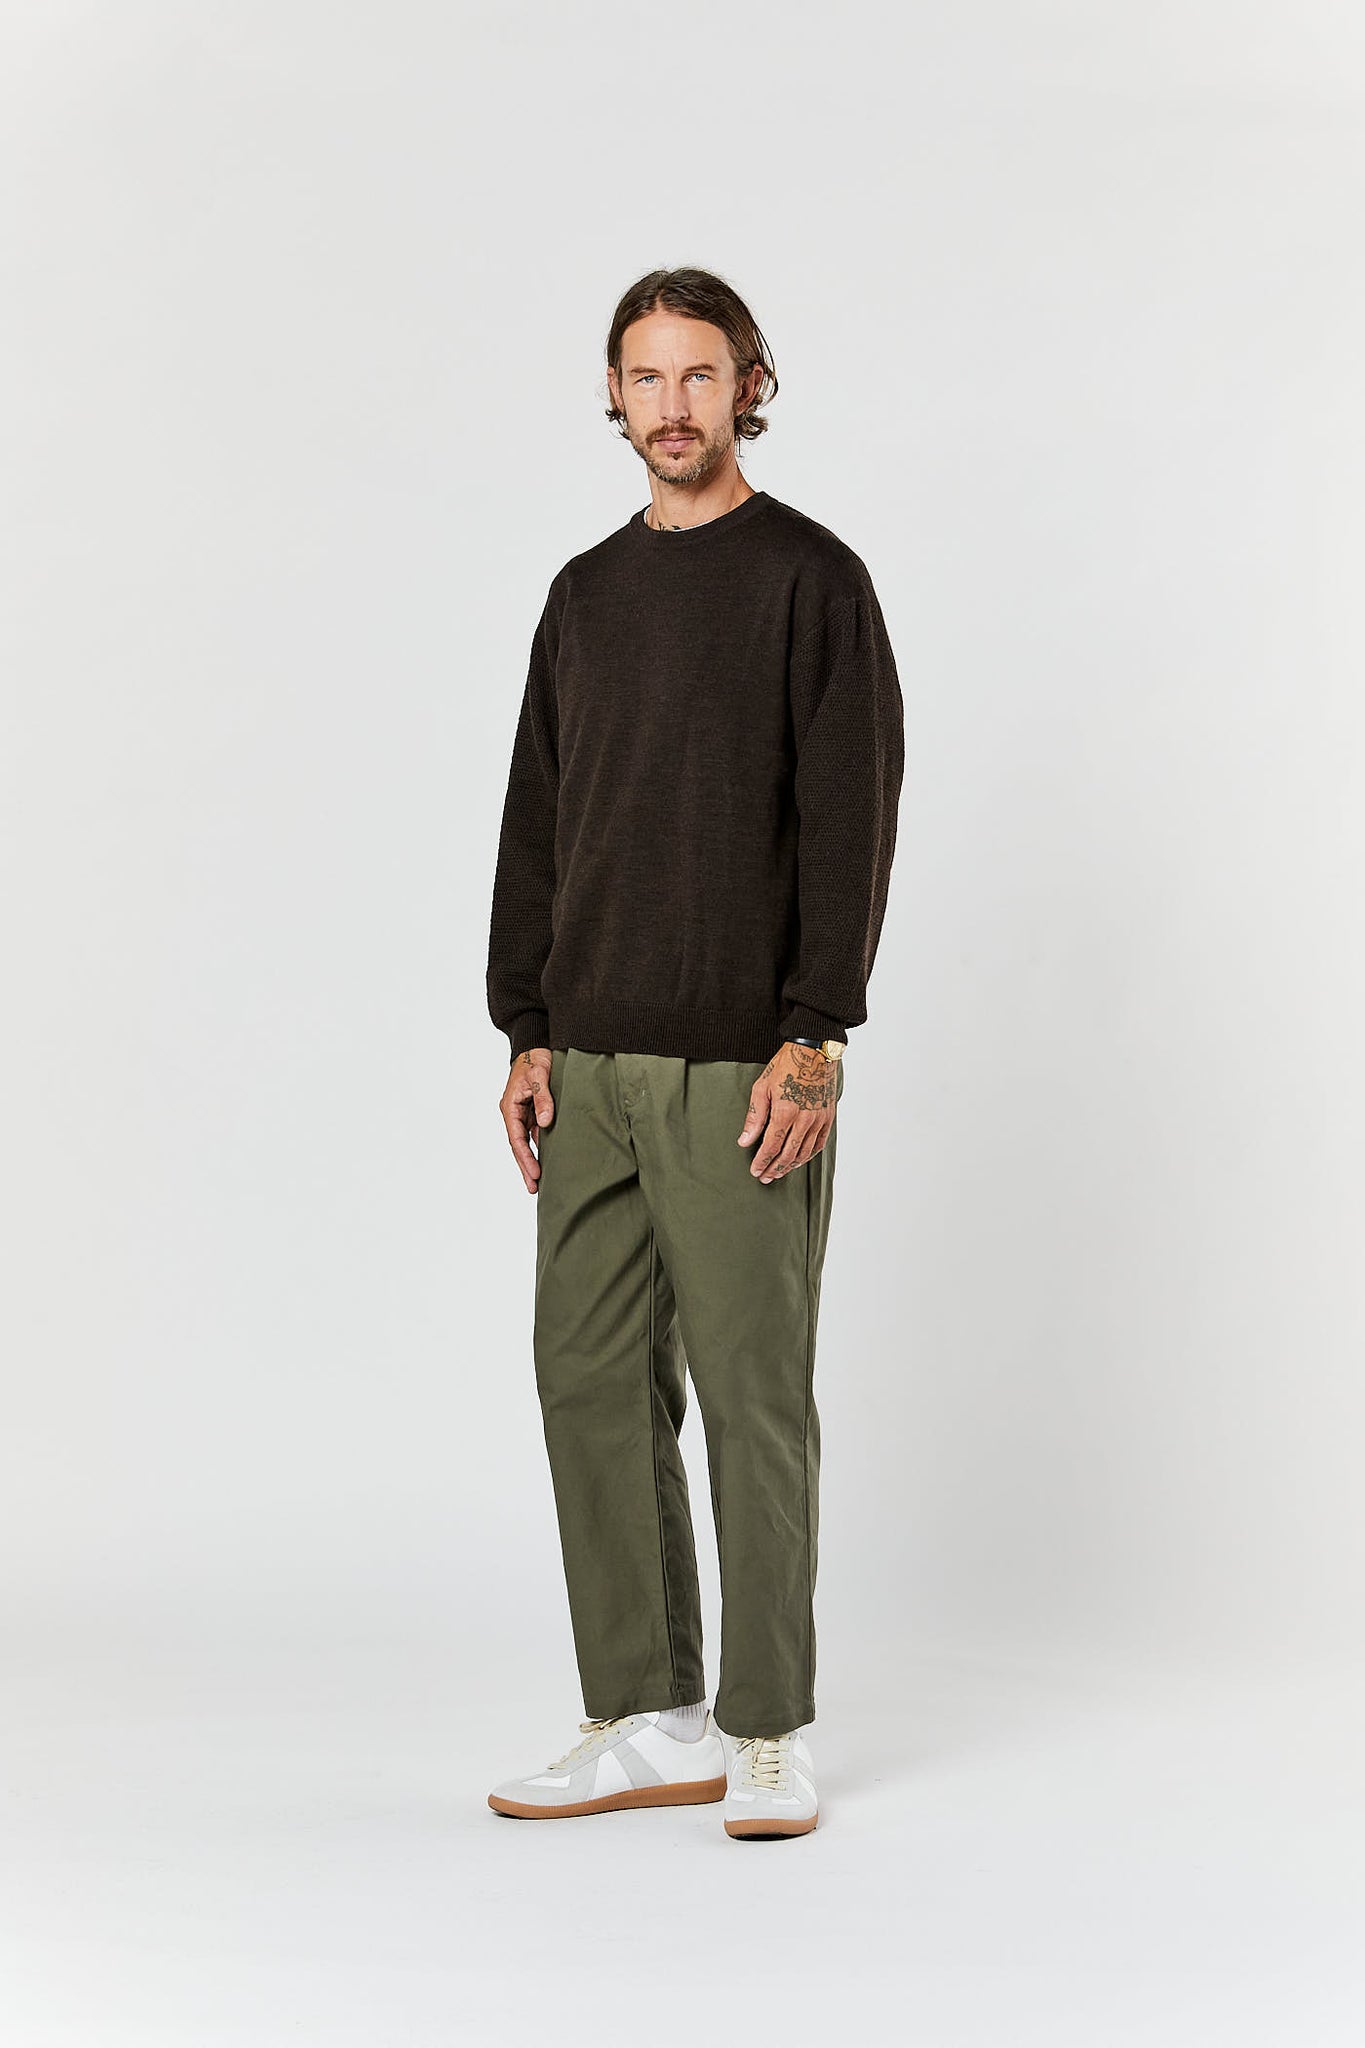 Dark Brown Wool Sweater